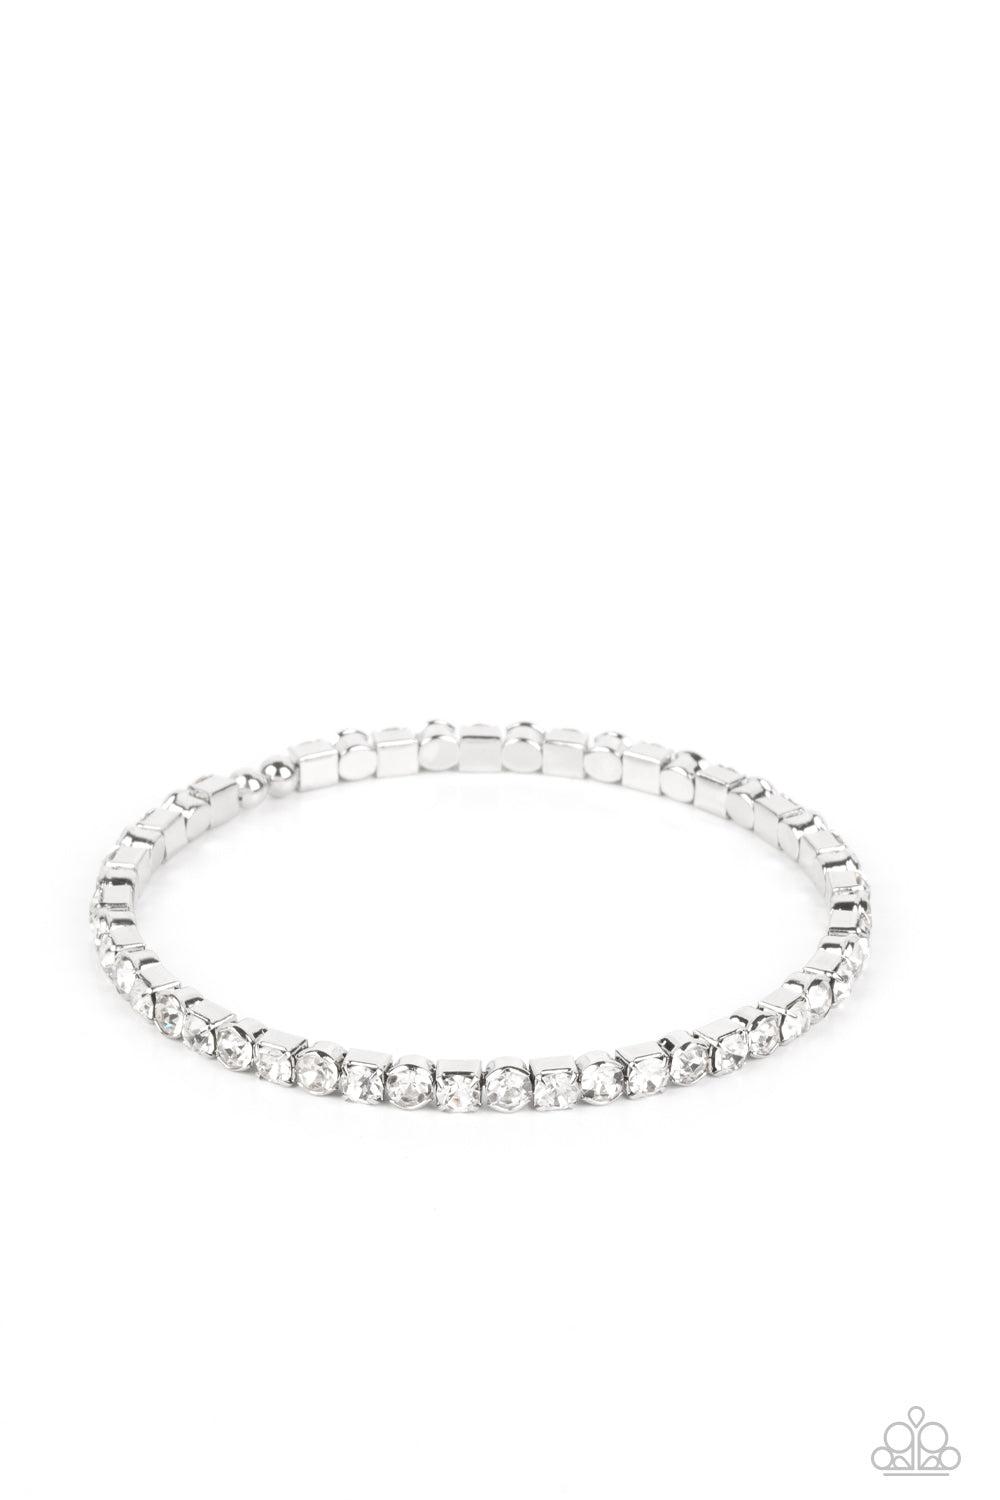 Rhinestone Spell White Bracelet - Paparazzi Accessories- lightbox - CarasShop.com - $5 Jewelry by Cara Jewels